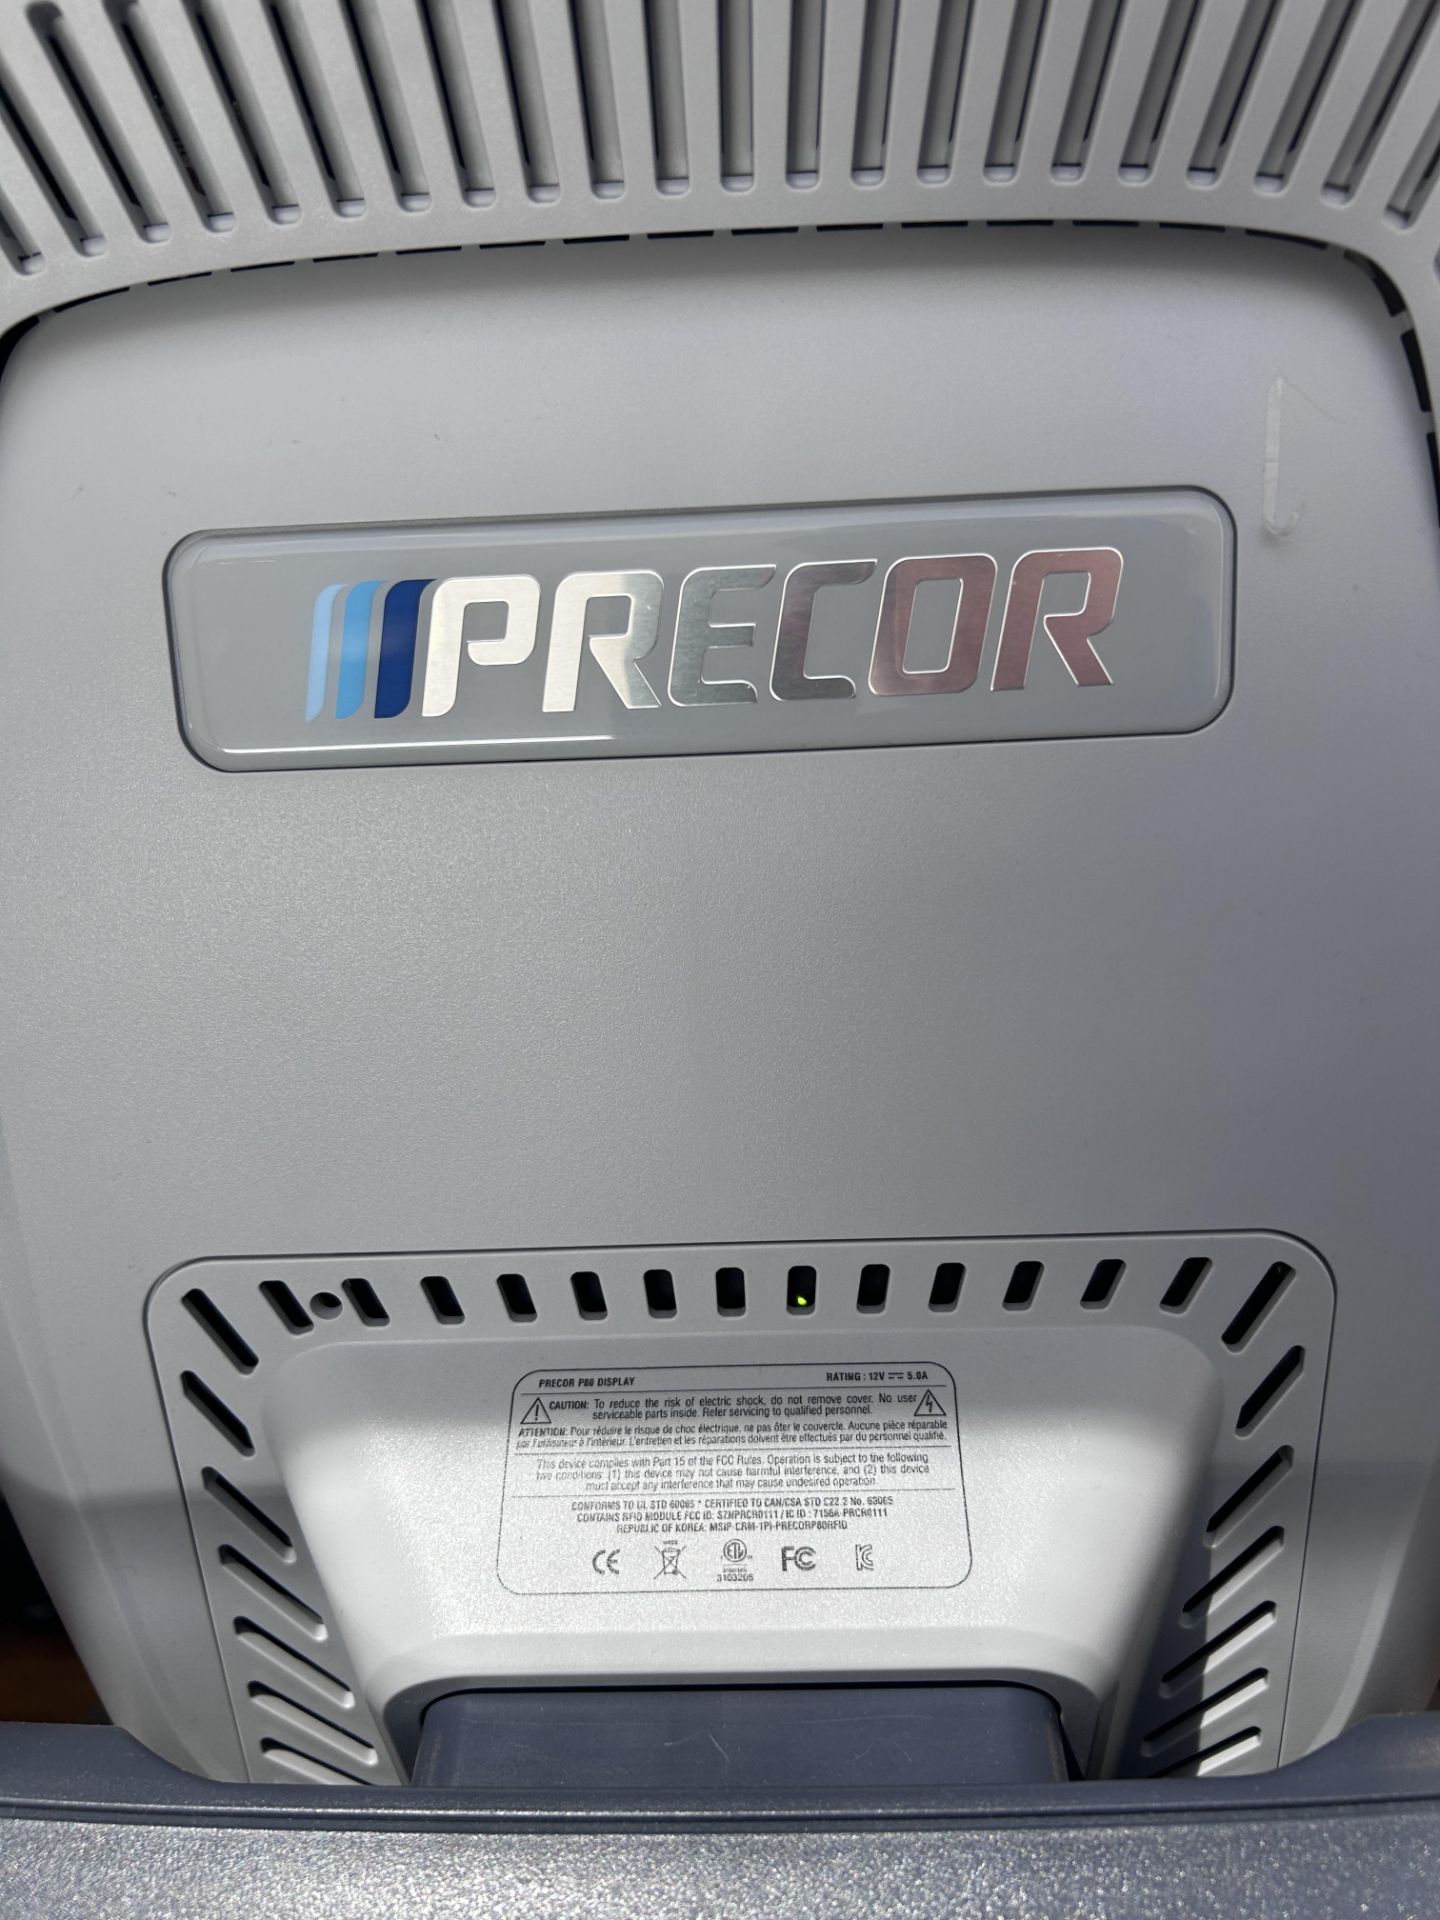 PRECOR mod. TRM 811 Treadmill with PRECOR P80 Display Console, ser. AGNBJ27140024 - Image 3 of 4